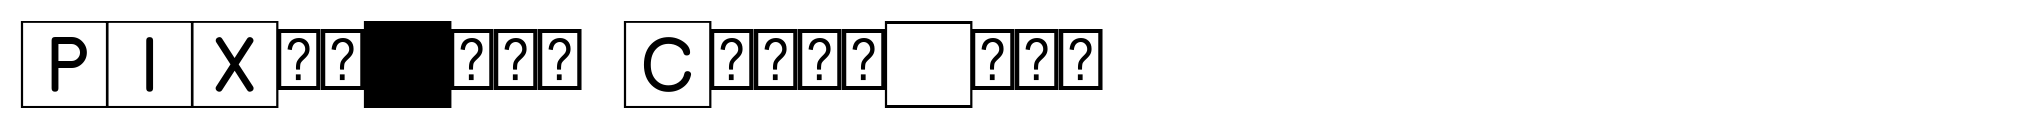 PIXymbols Crossword image